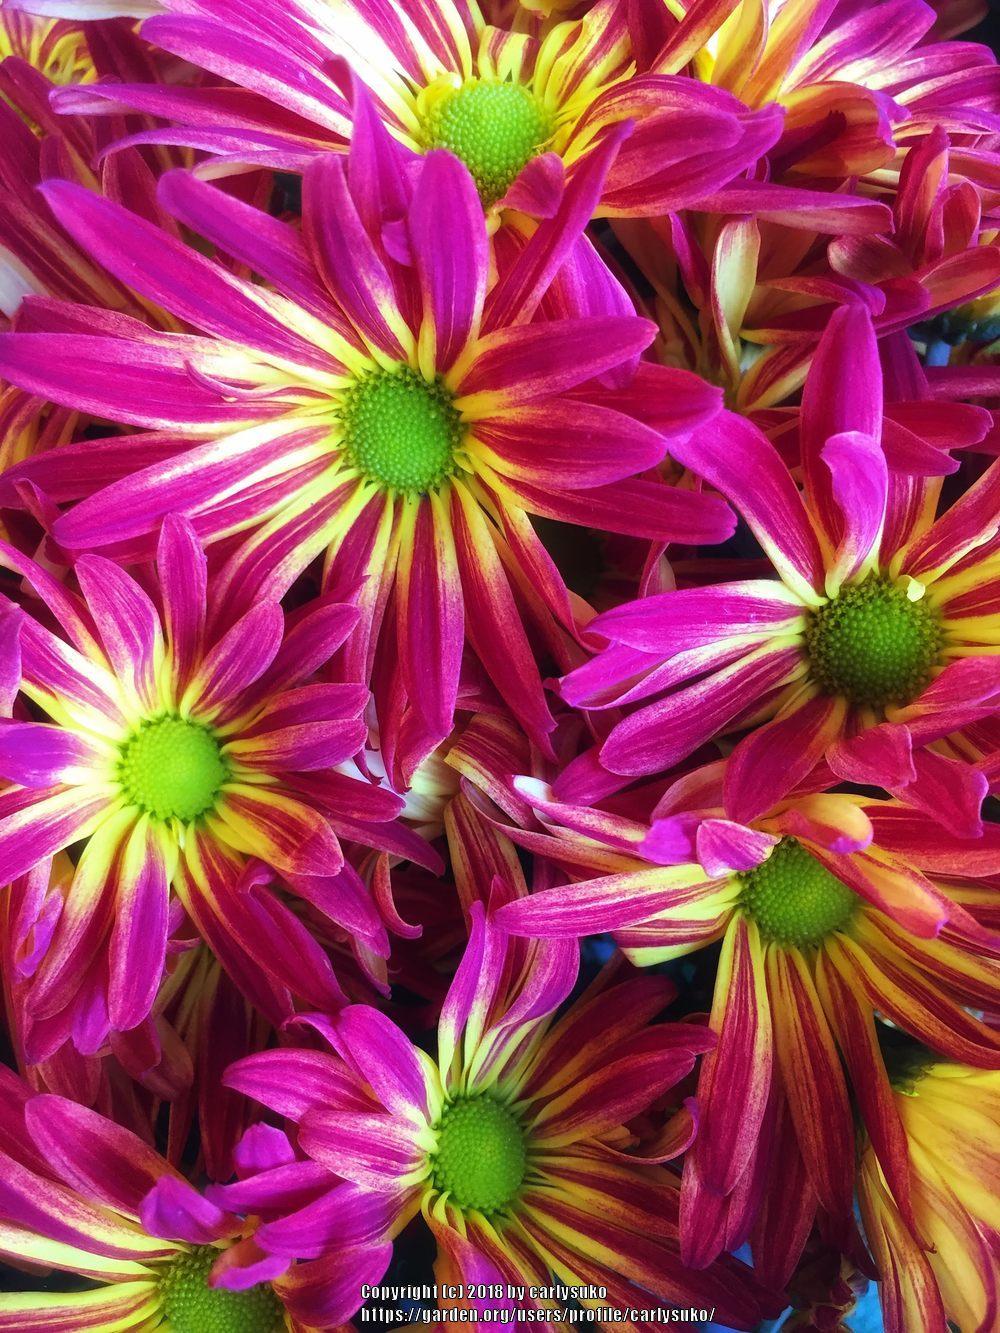 Photo of Chrysanthemum uploaded by carlysuko